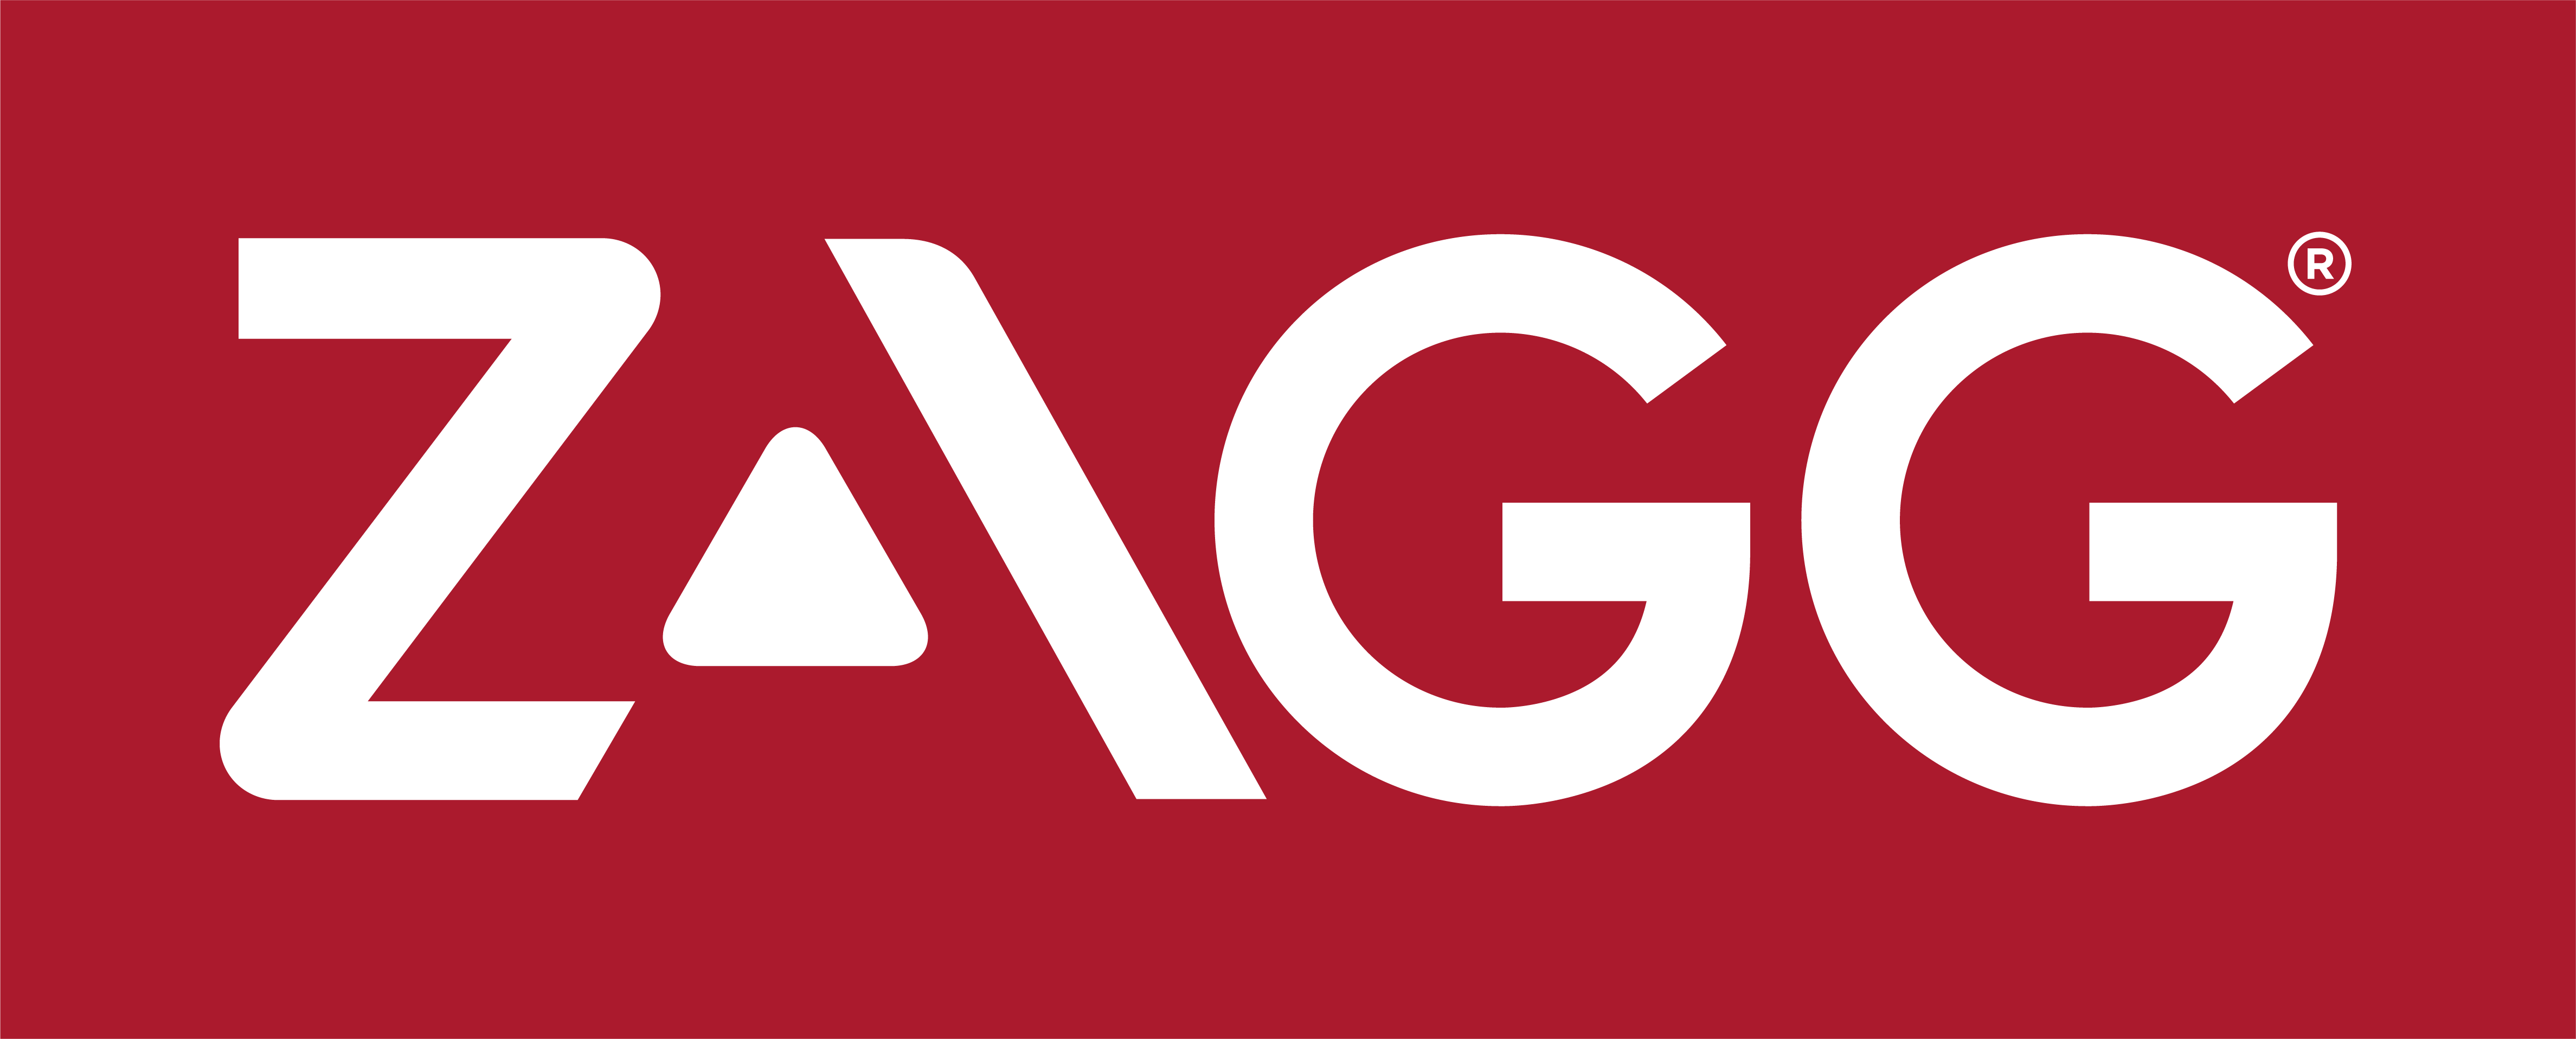 ZAGG Announces 2014 